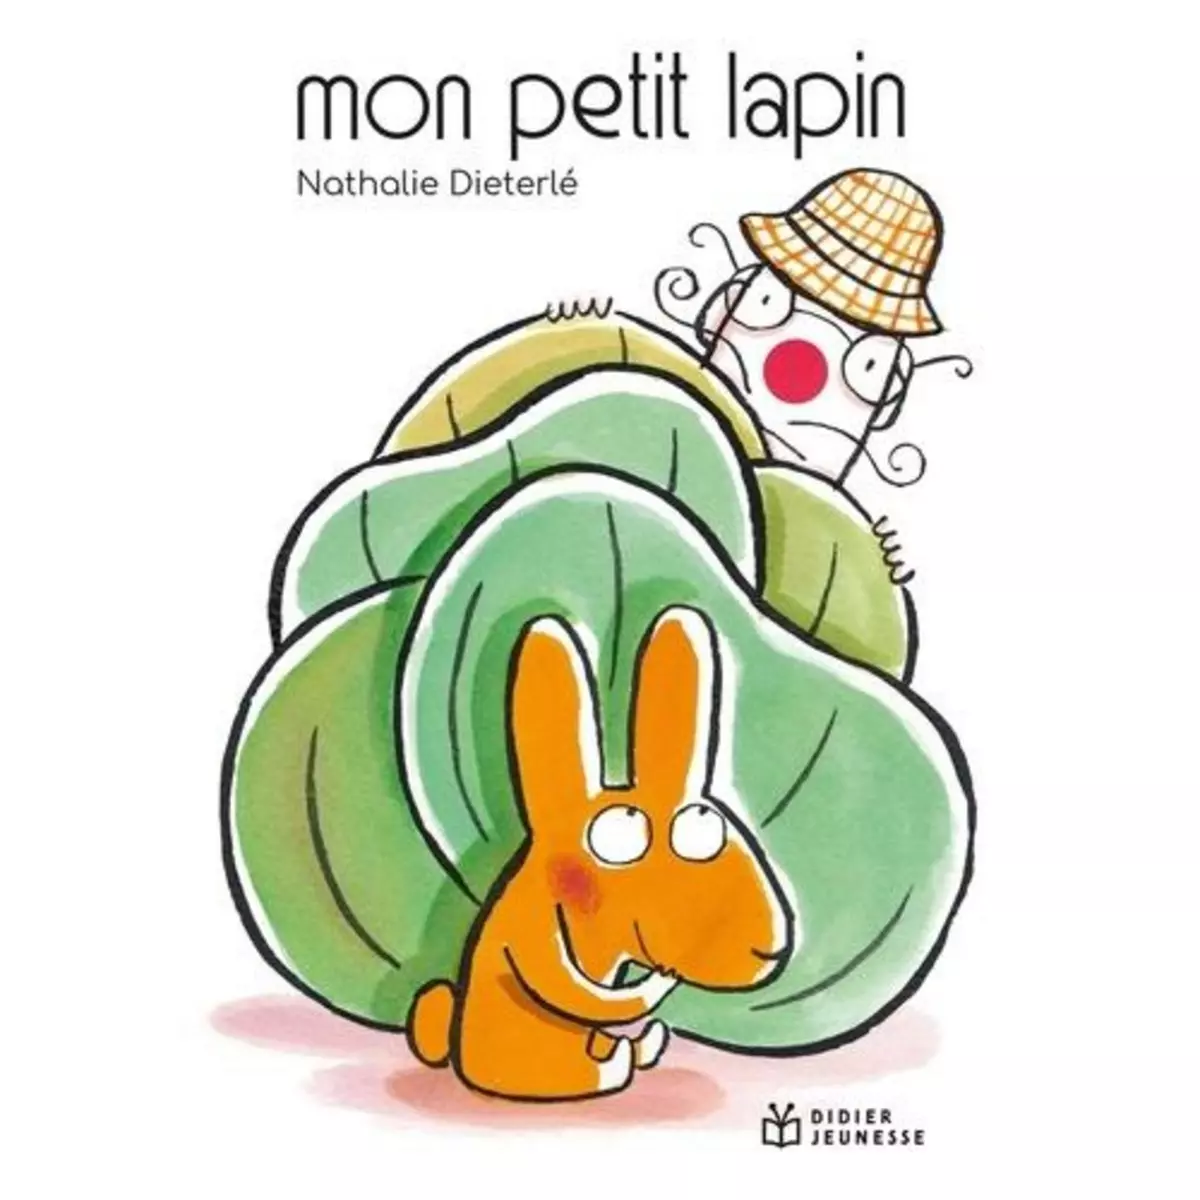  MON PETIT LAPIN, Dieterlé Nathalie